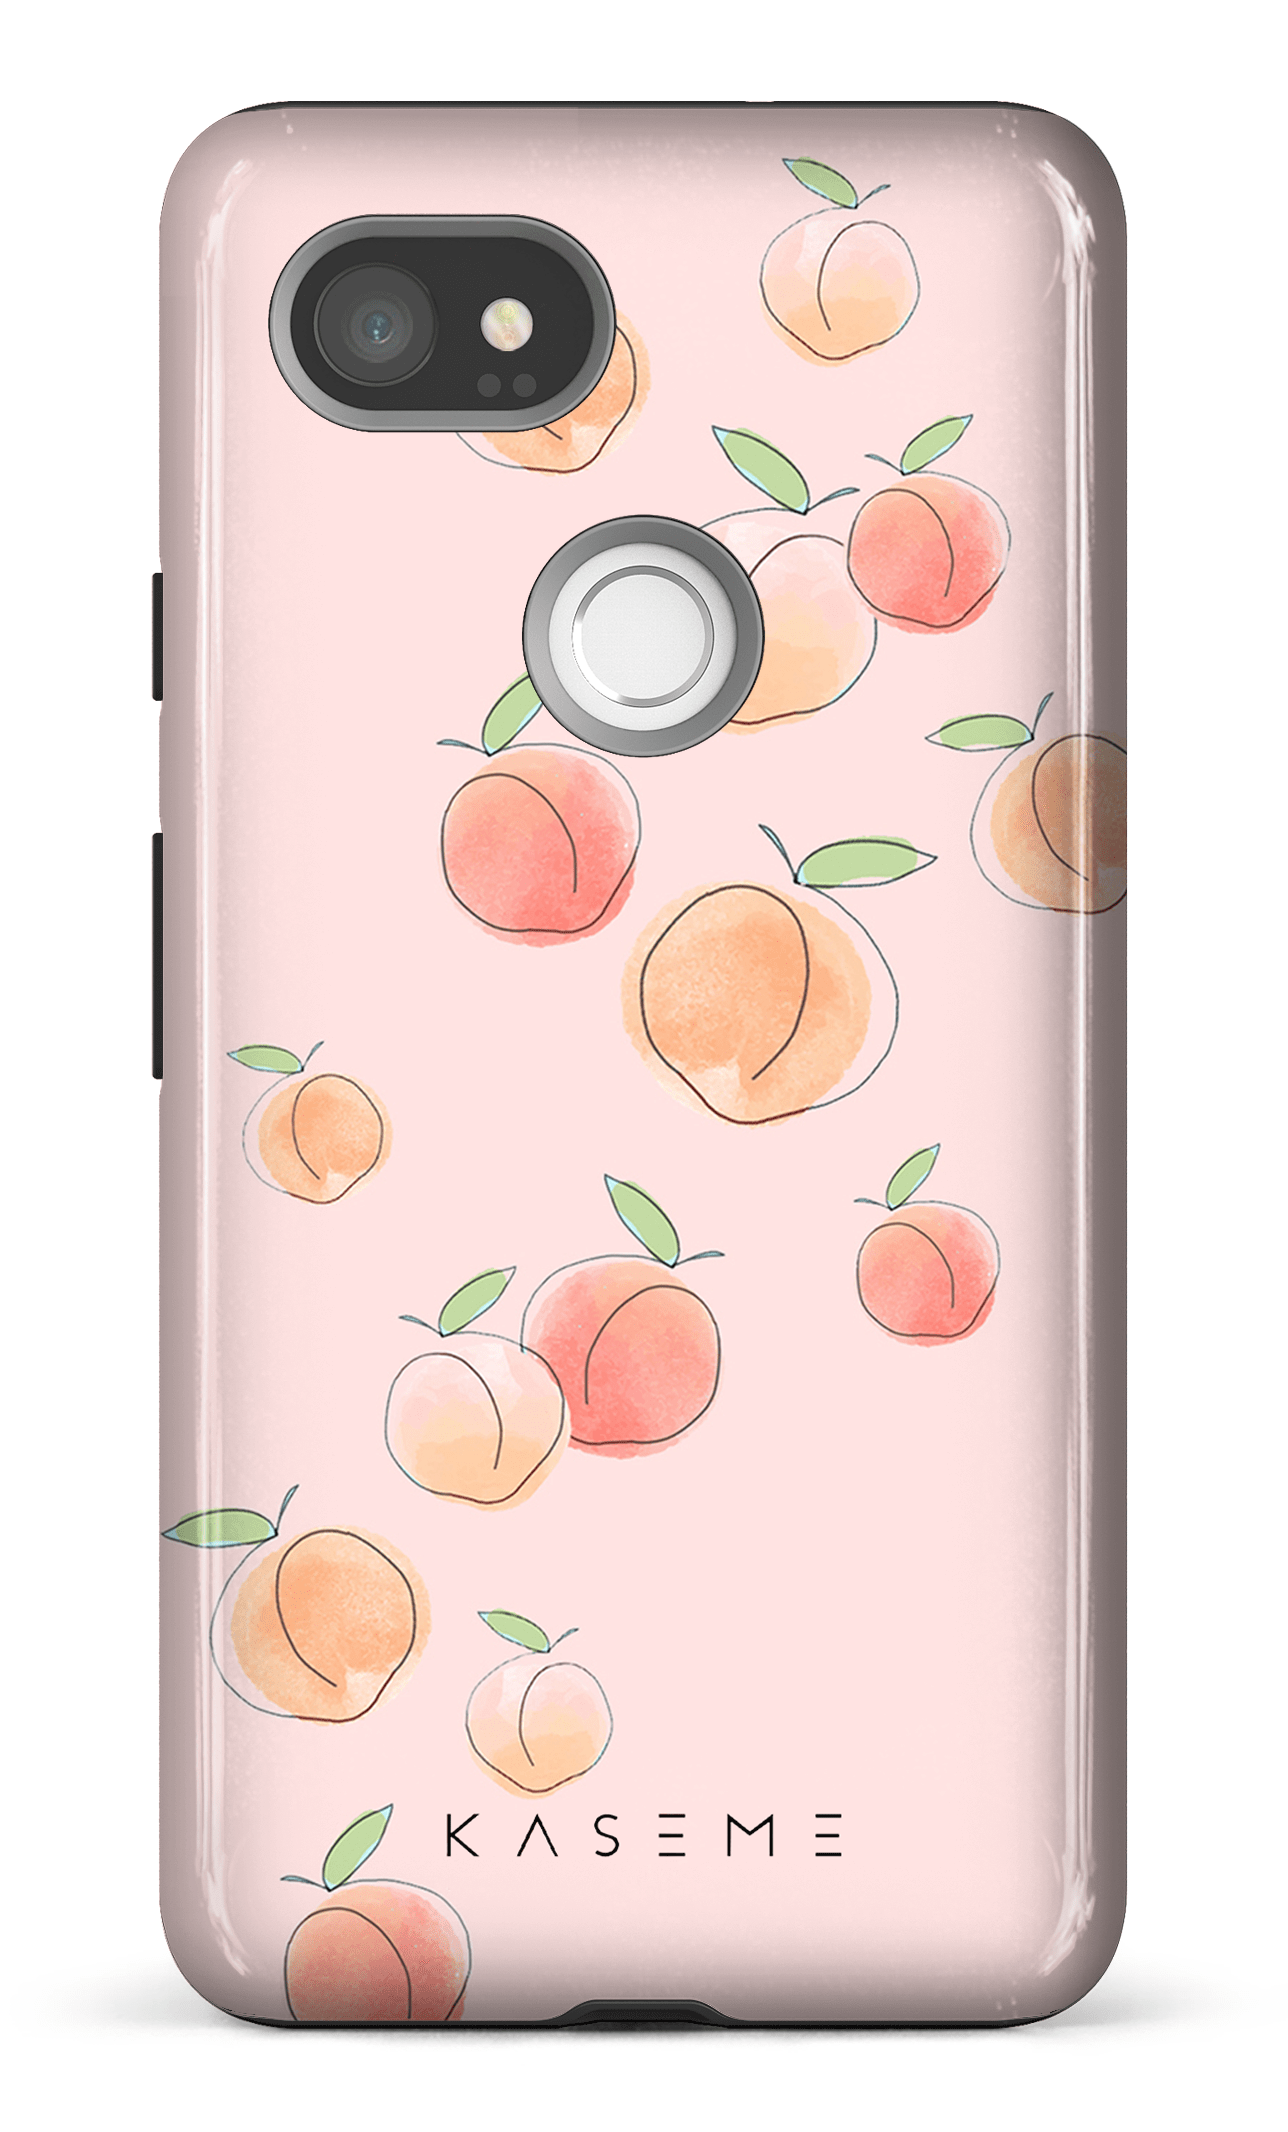 Peachy pink - Google Pixel 2 XL